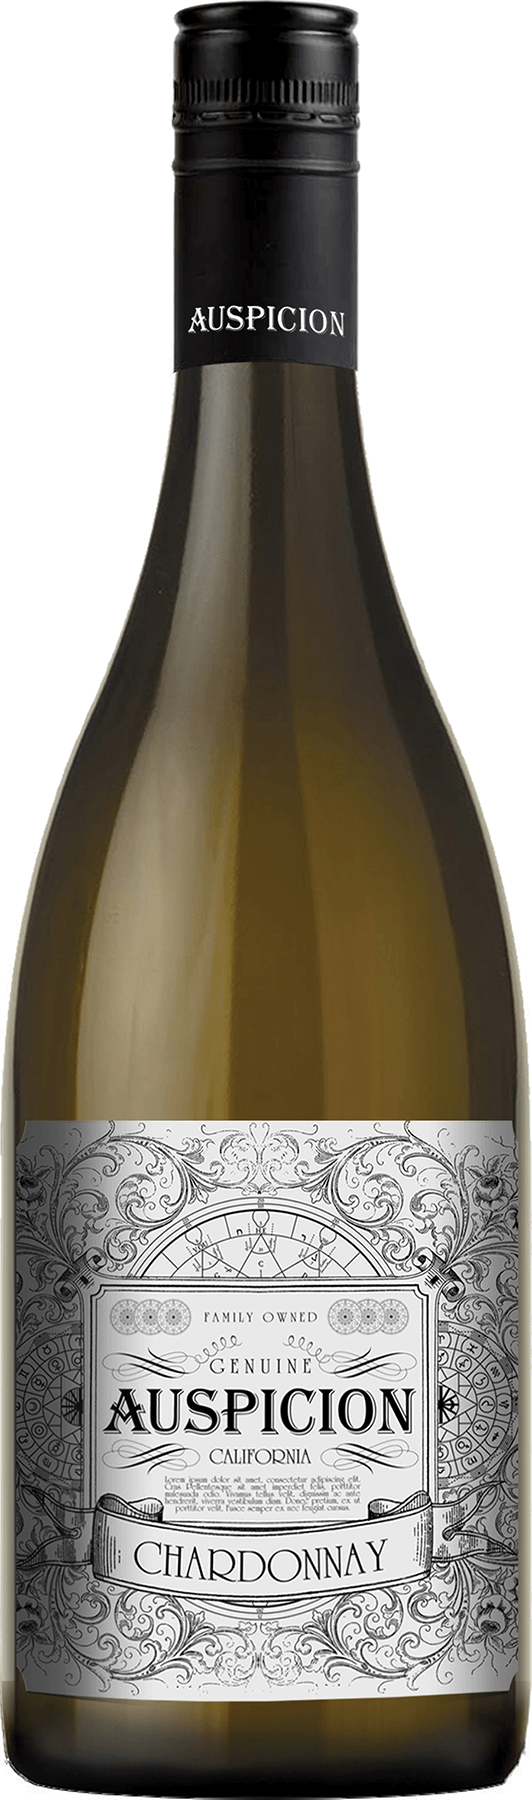 Auspicion Chardonnay 2016